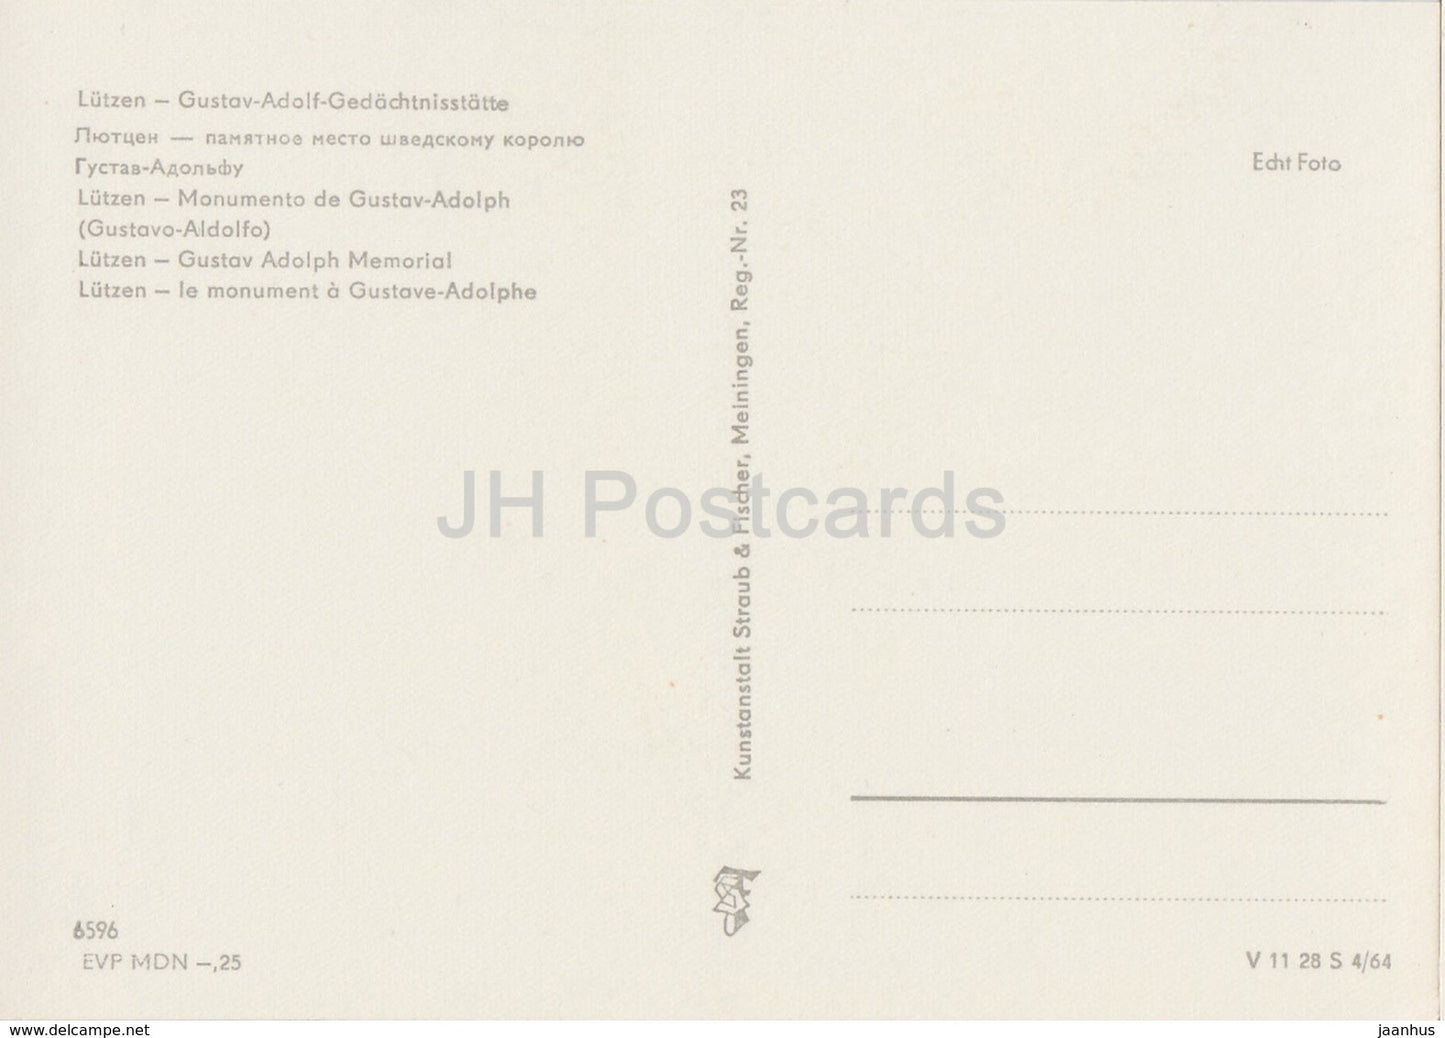 Lützen - Gustav Adolph Memorial - REISEBÜRO - 1964 - DDR - Germany - unused - JH Postcards